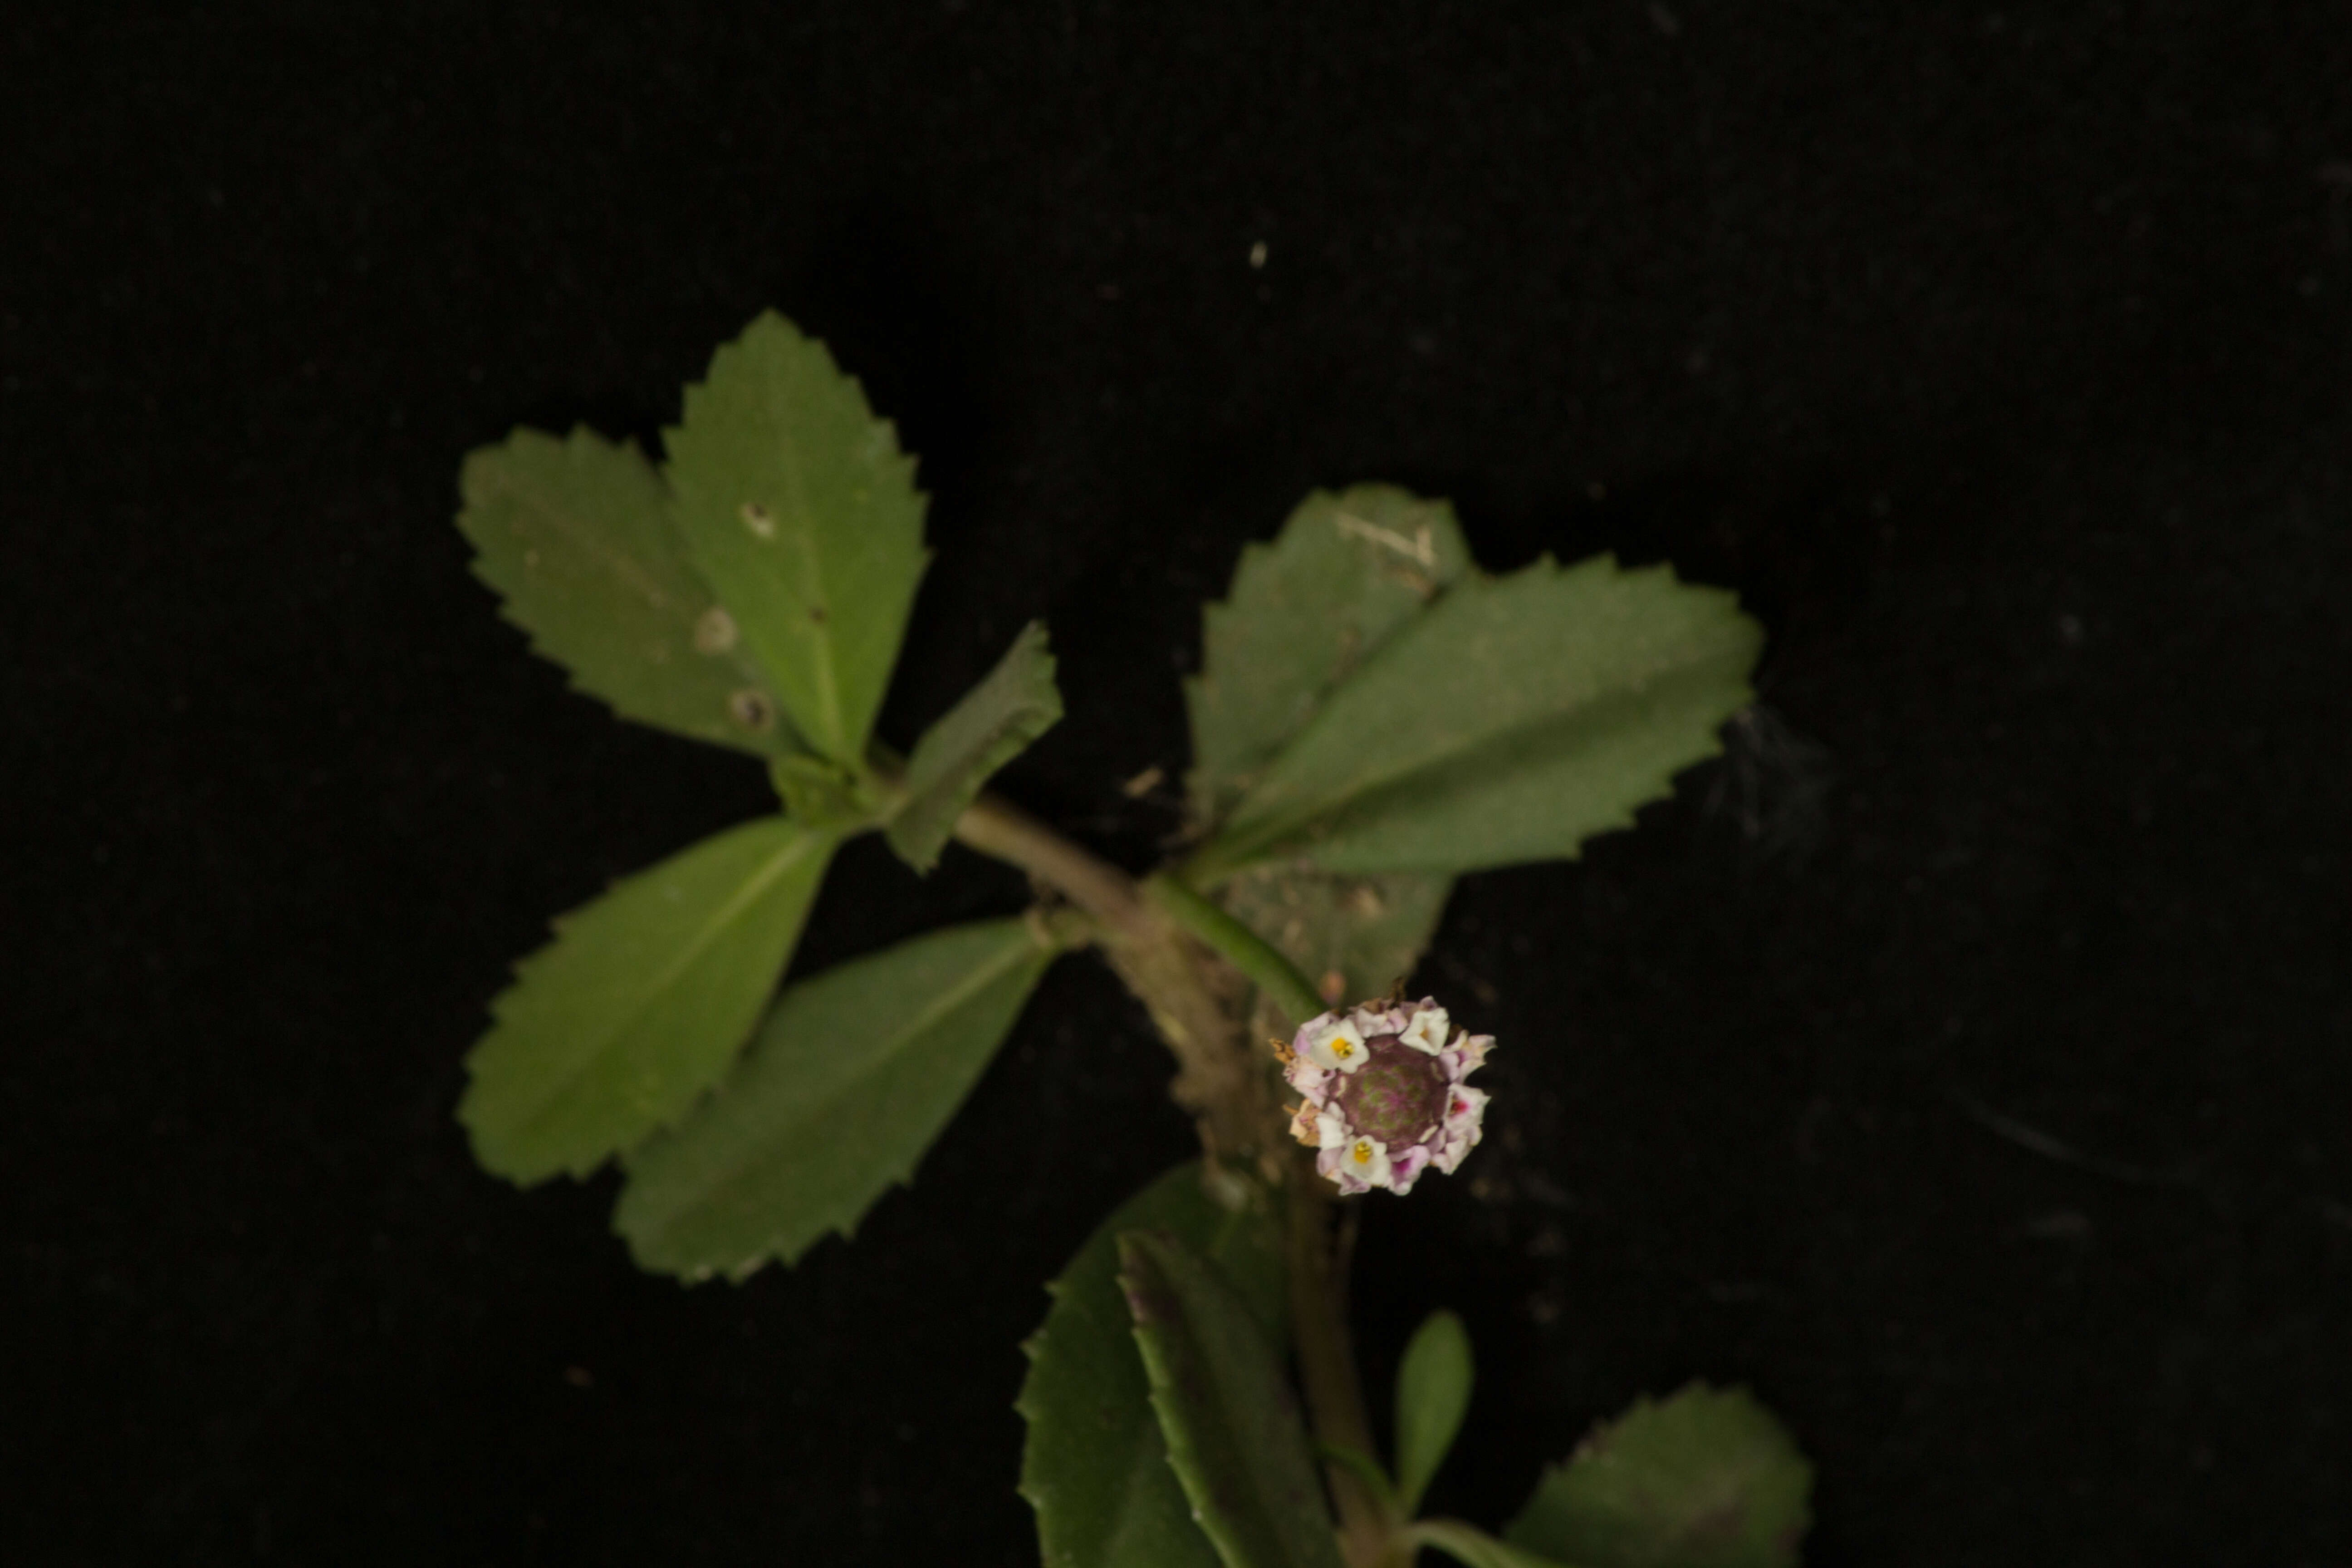 Sivun Phyla nodiflora (L.) Greene kuva